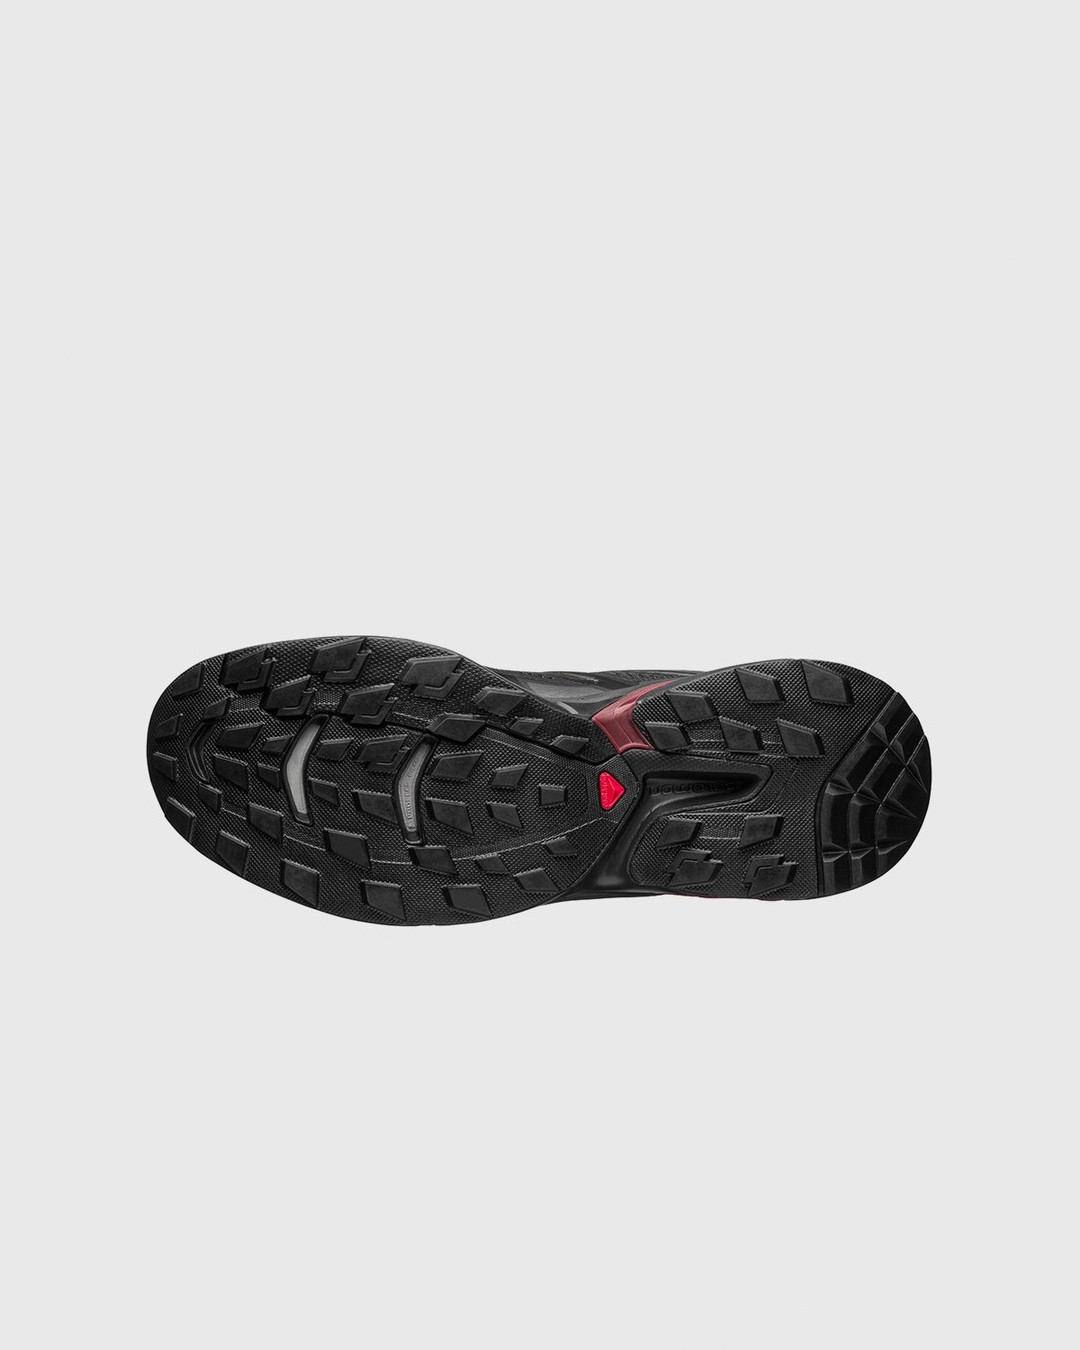 Salomon – XT-Wings 2 Advanced Black - Sneakers - Black - Image 5